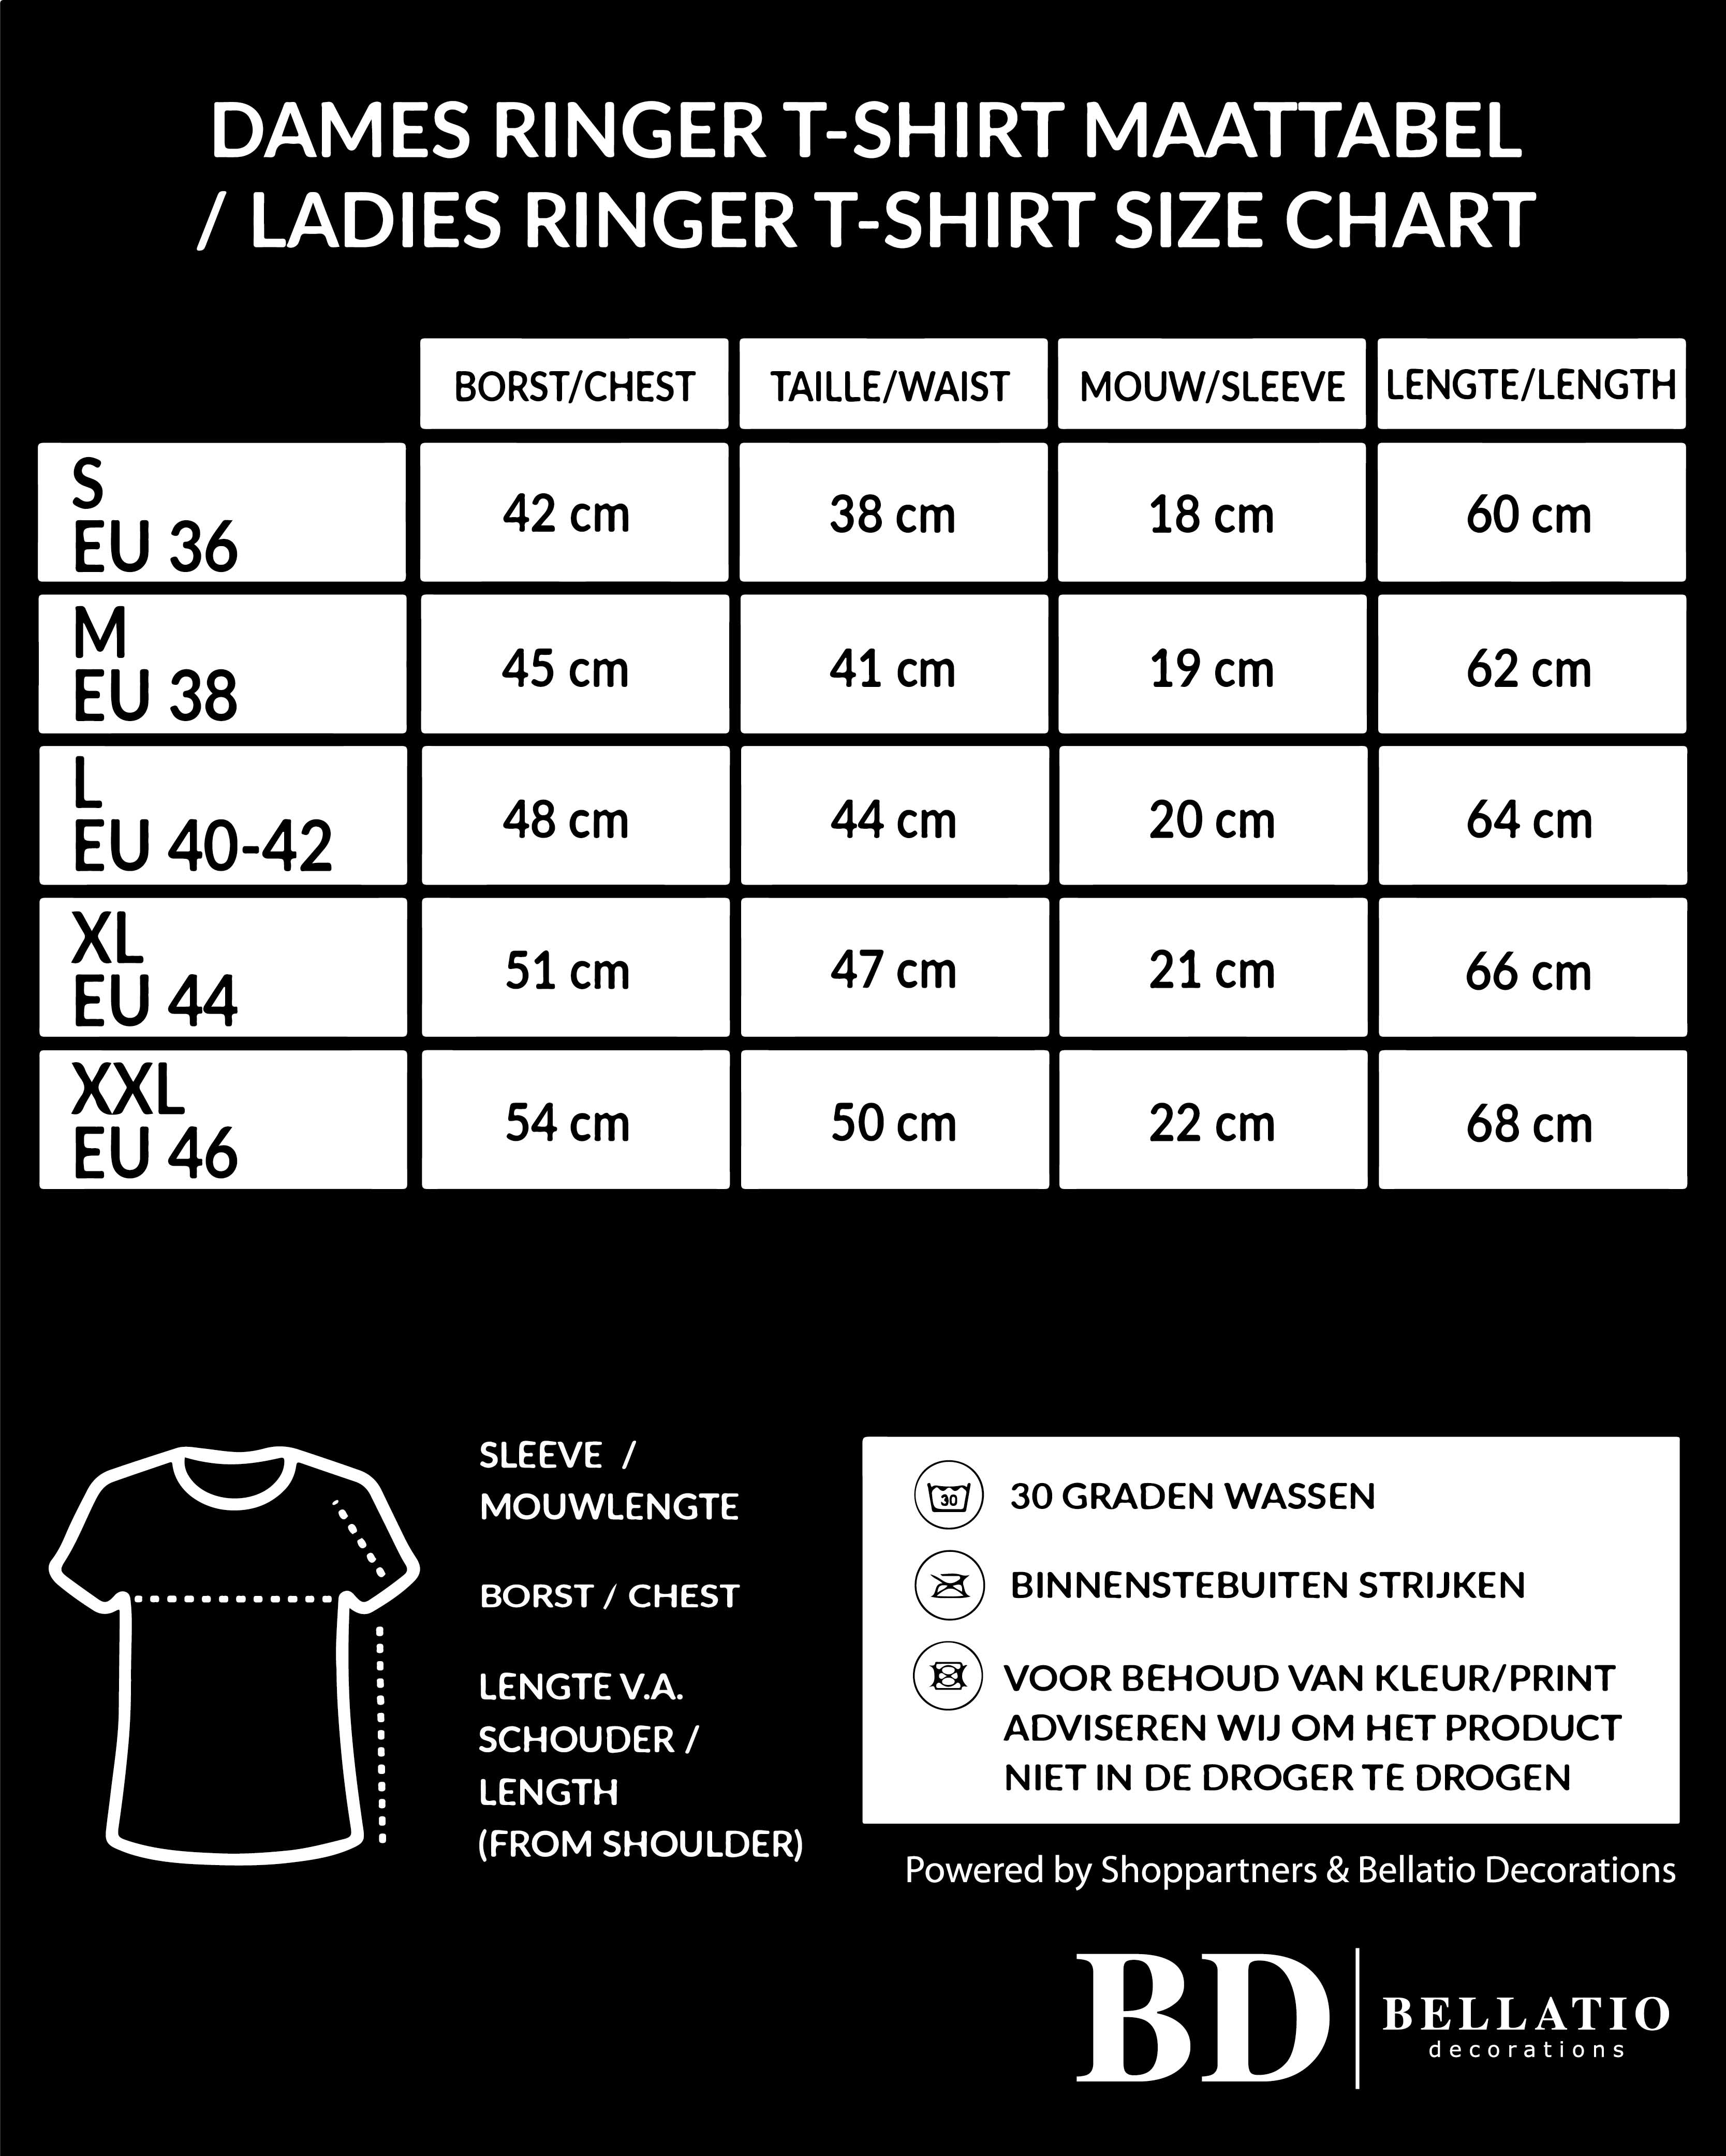 Super collega wit/zwart ringer t-shirt voor dames